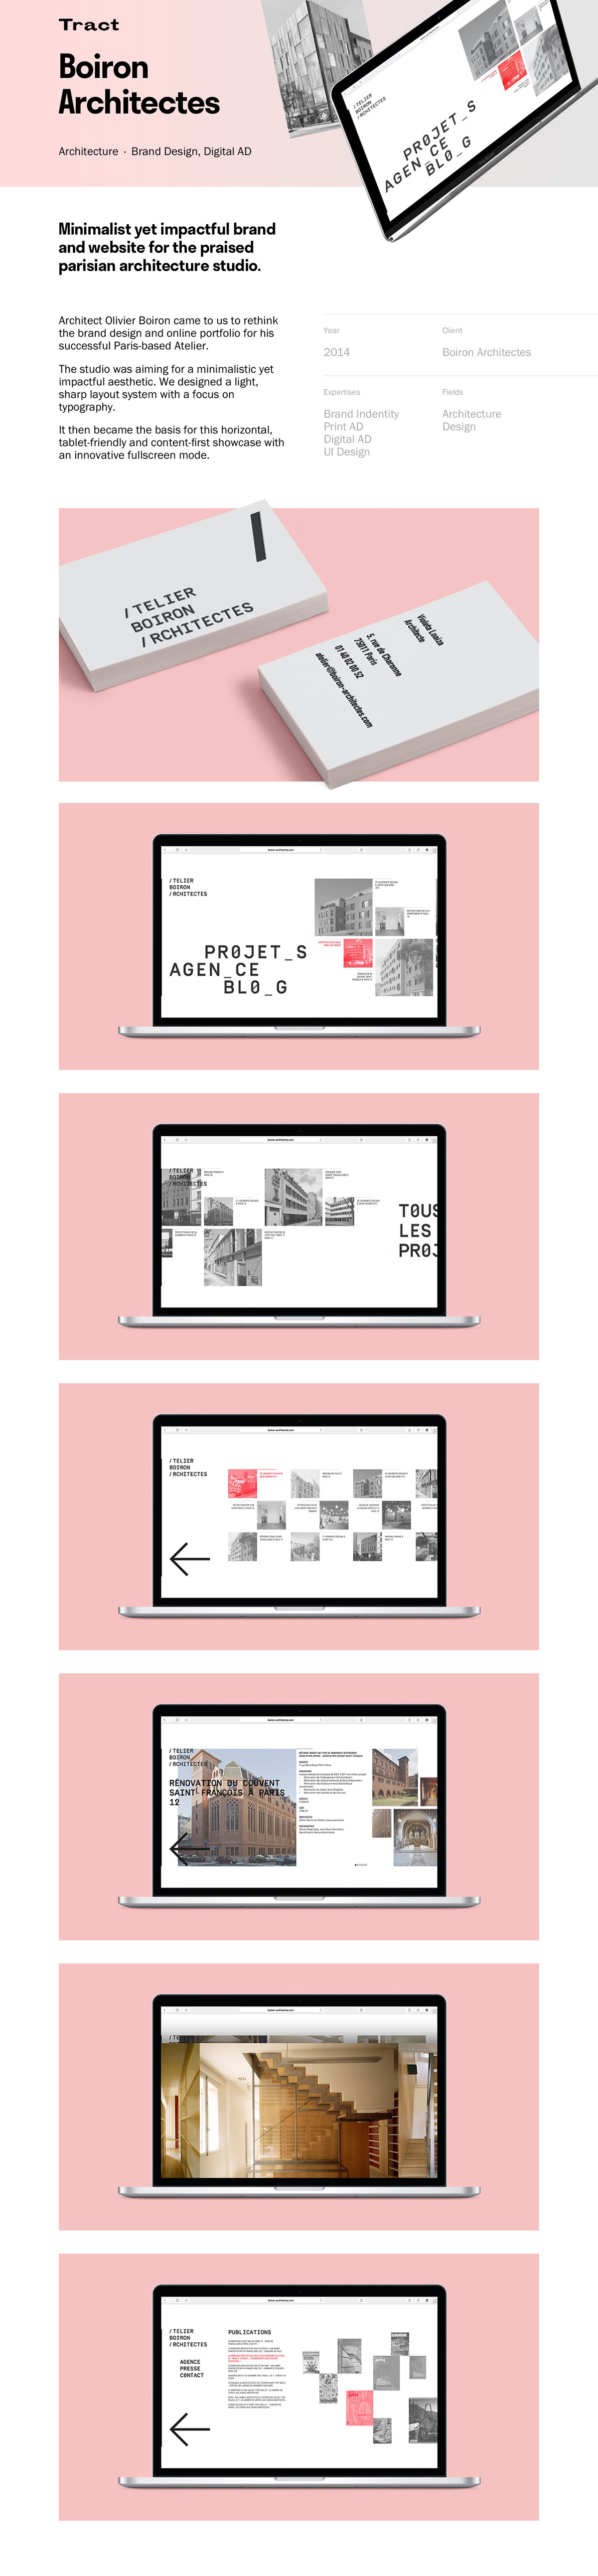 Paris architect slideshow fullscreen horizontal monospaced